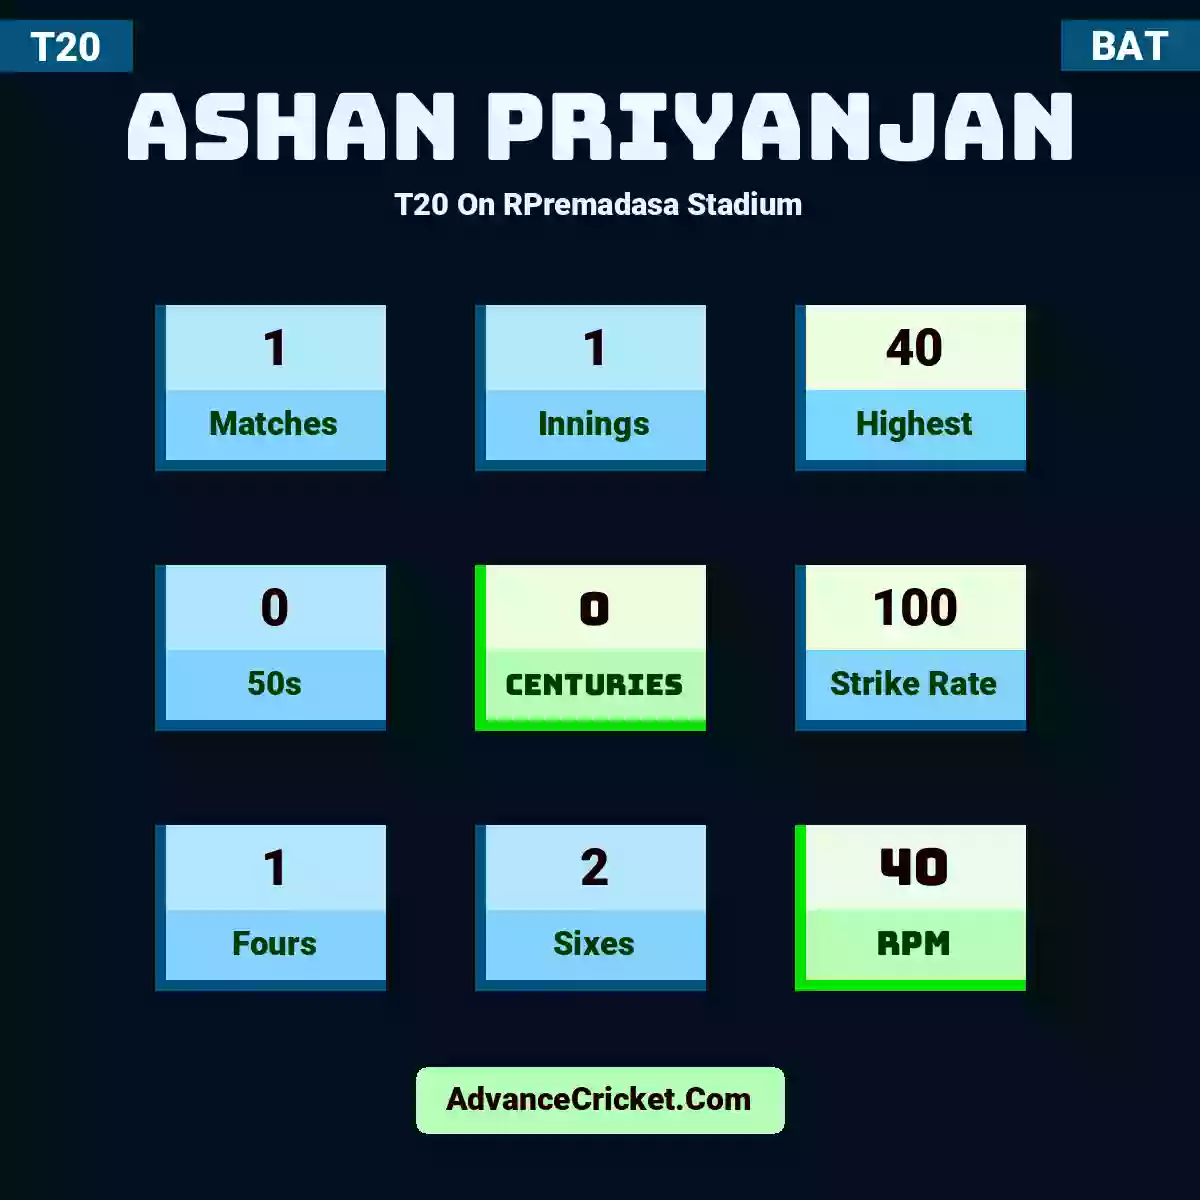 Ashan Priyanjan T20  On RPremadasa Stadium, Ashan Priyanjan played 1 matches, scored 40 runs as highest, 0 half-centuries, and 0 centuries, with a strike rate of 100. A.Priyanjan hit 1 fours and 2 sixes, with an RPM of 40.